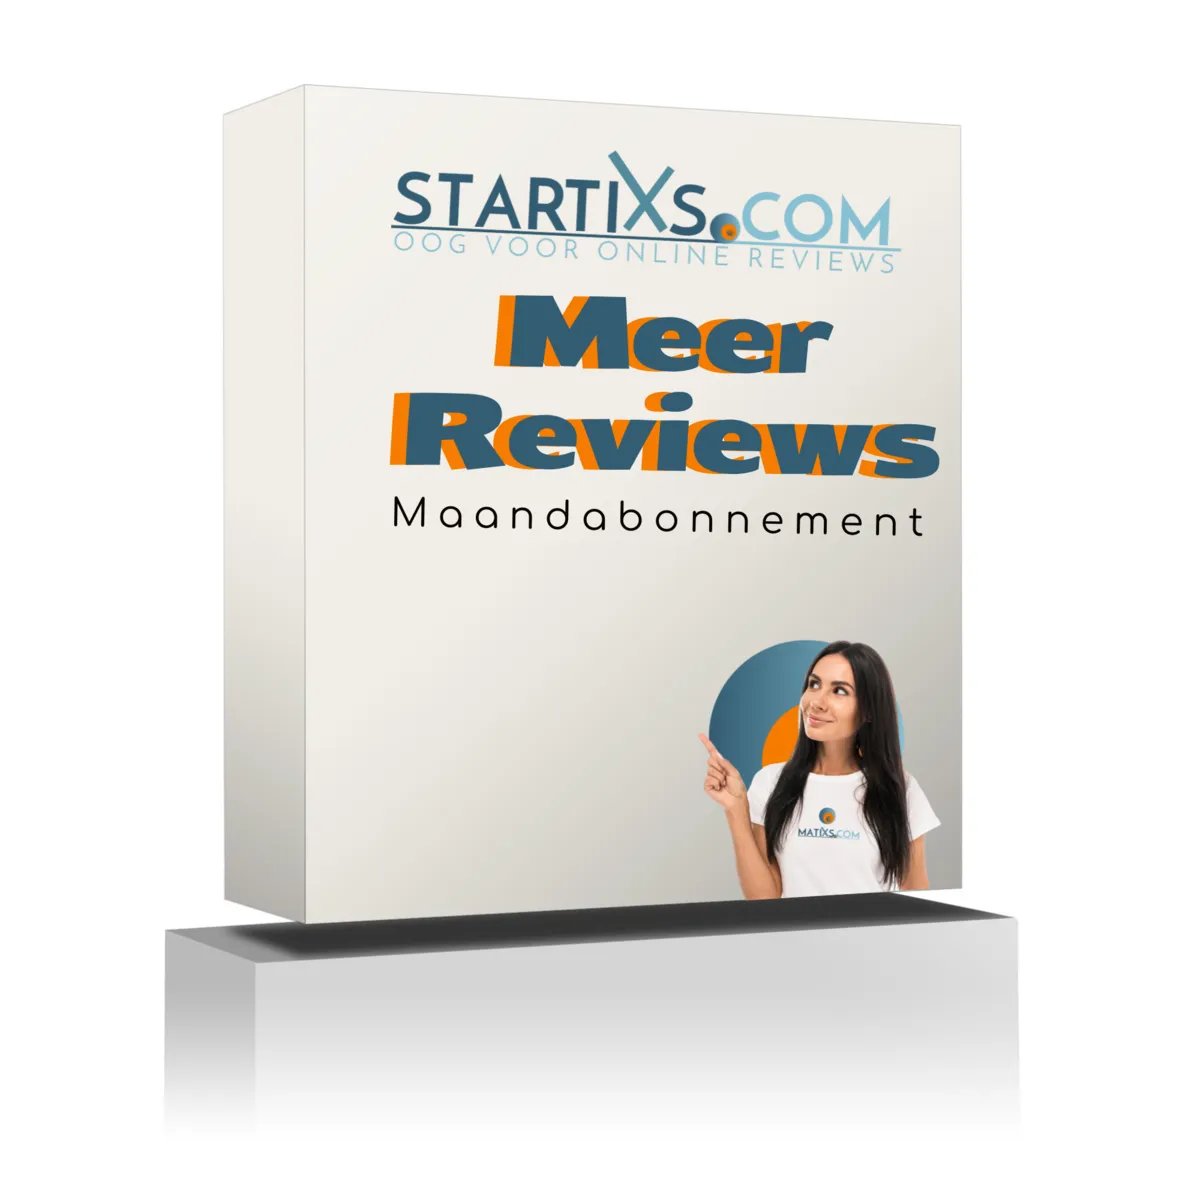 Startixs - Review software